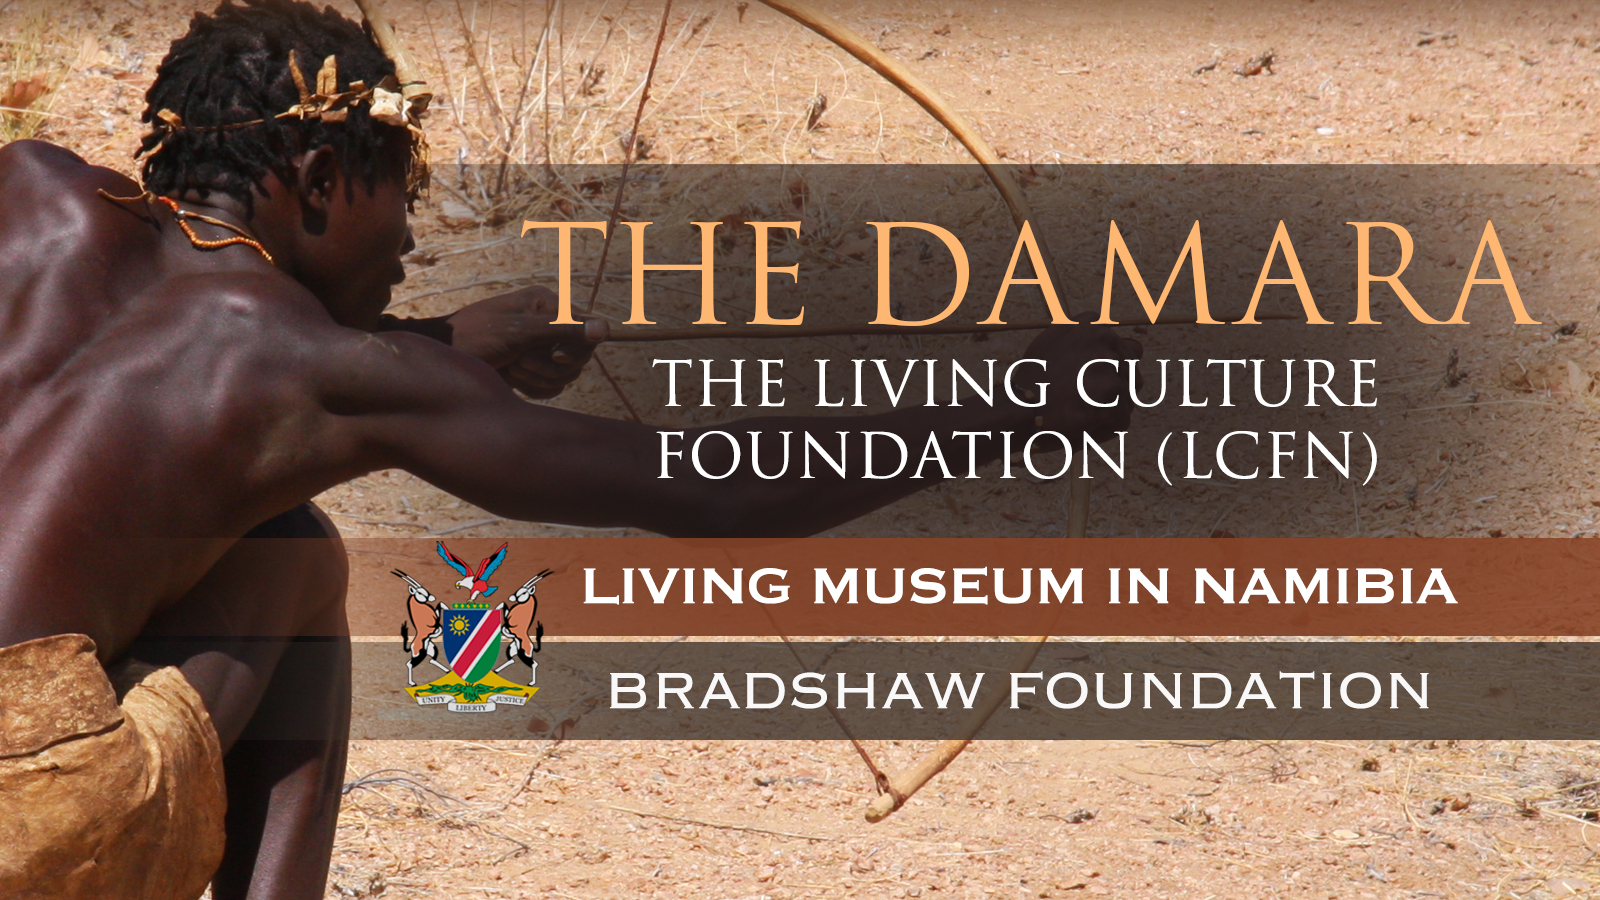 Damara People Living Culture Foundation Namibia Africa Bradshaw Foundation